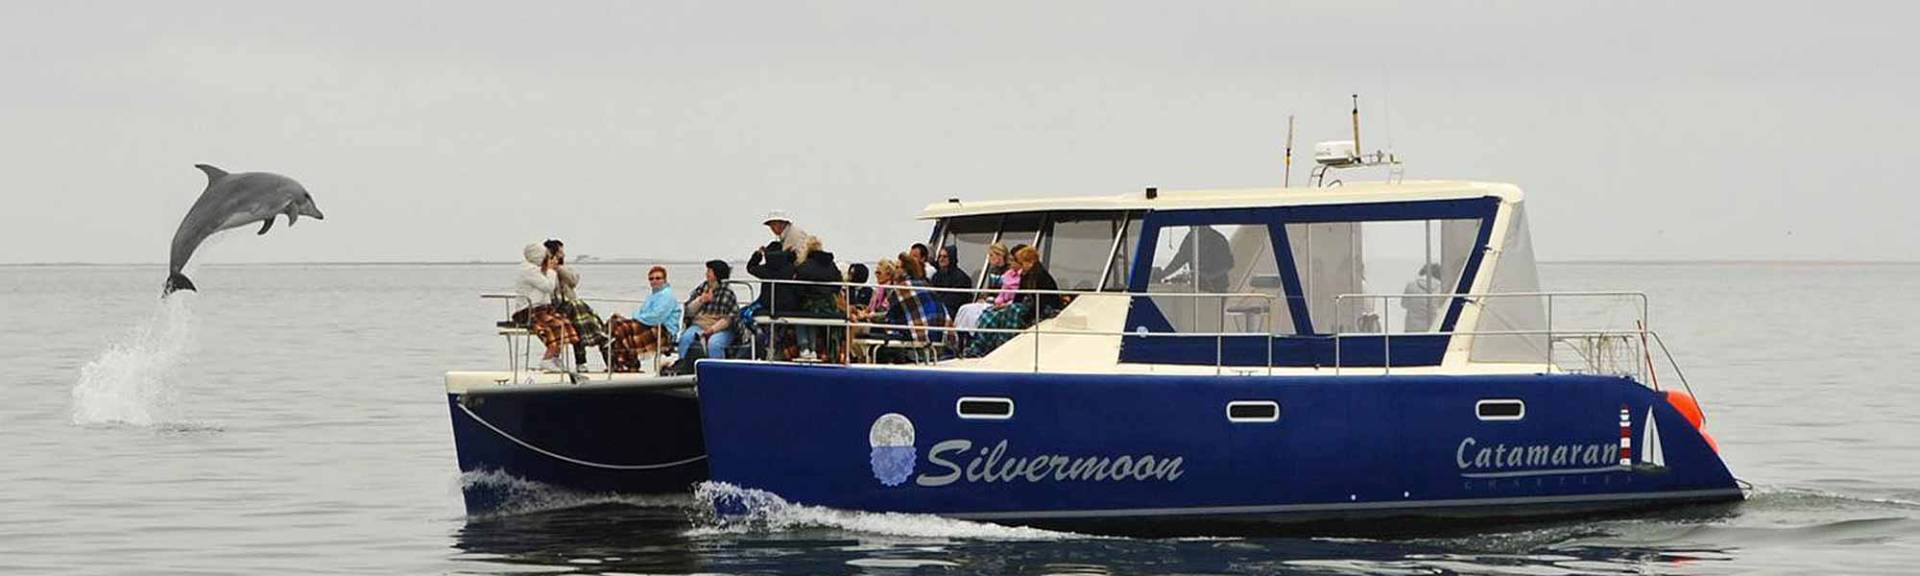 catamaran charters walvis bay facebook